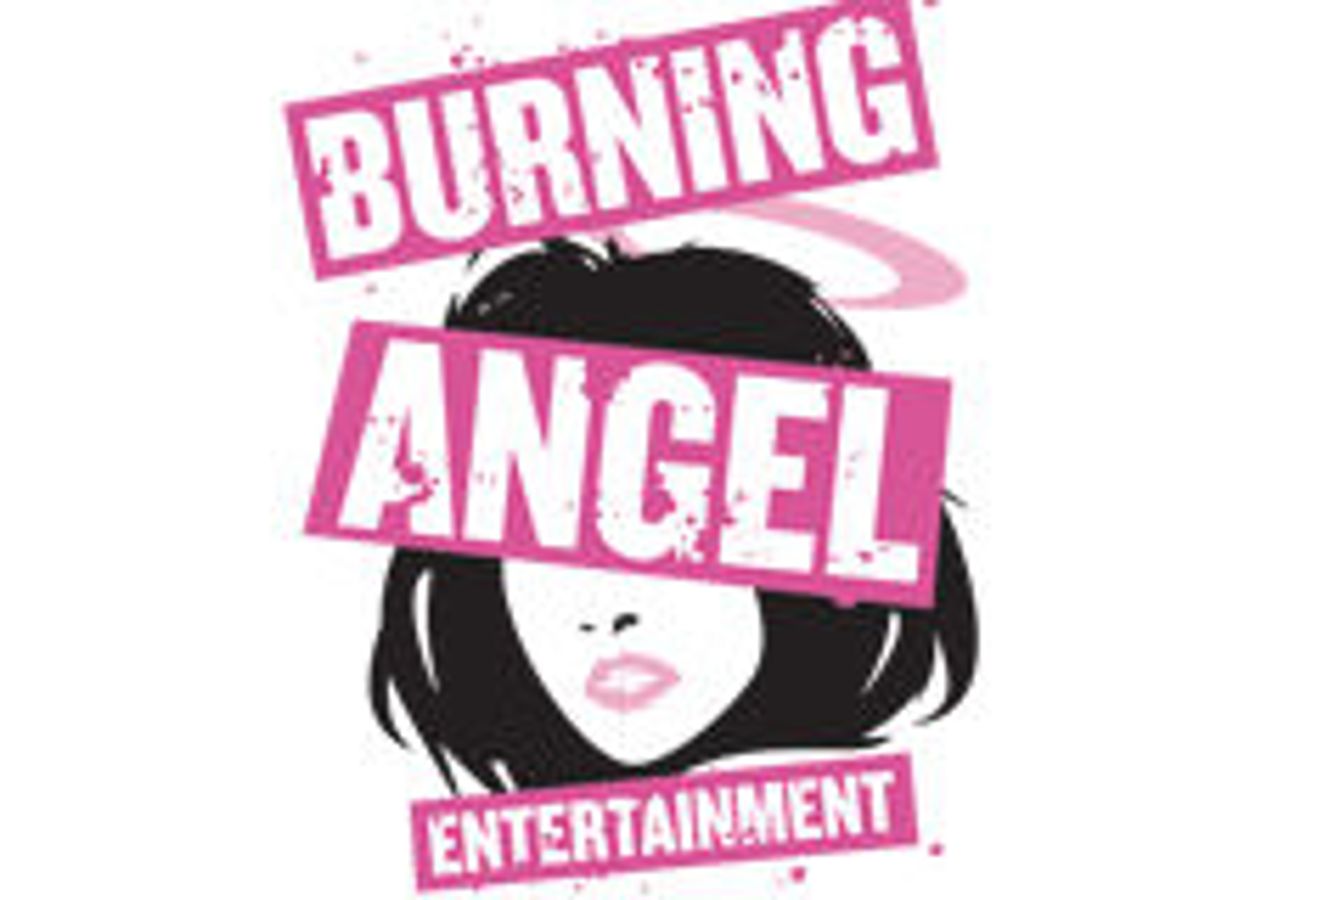 BurningAngel.com